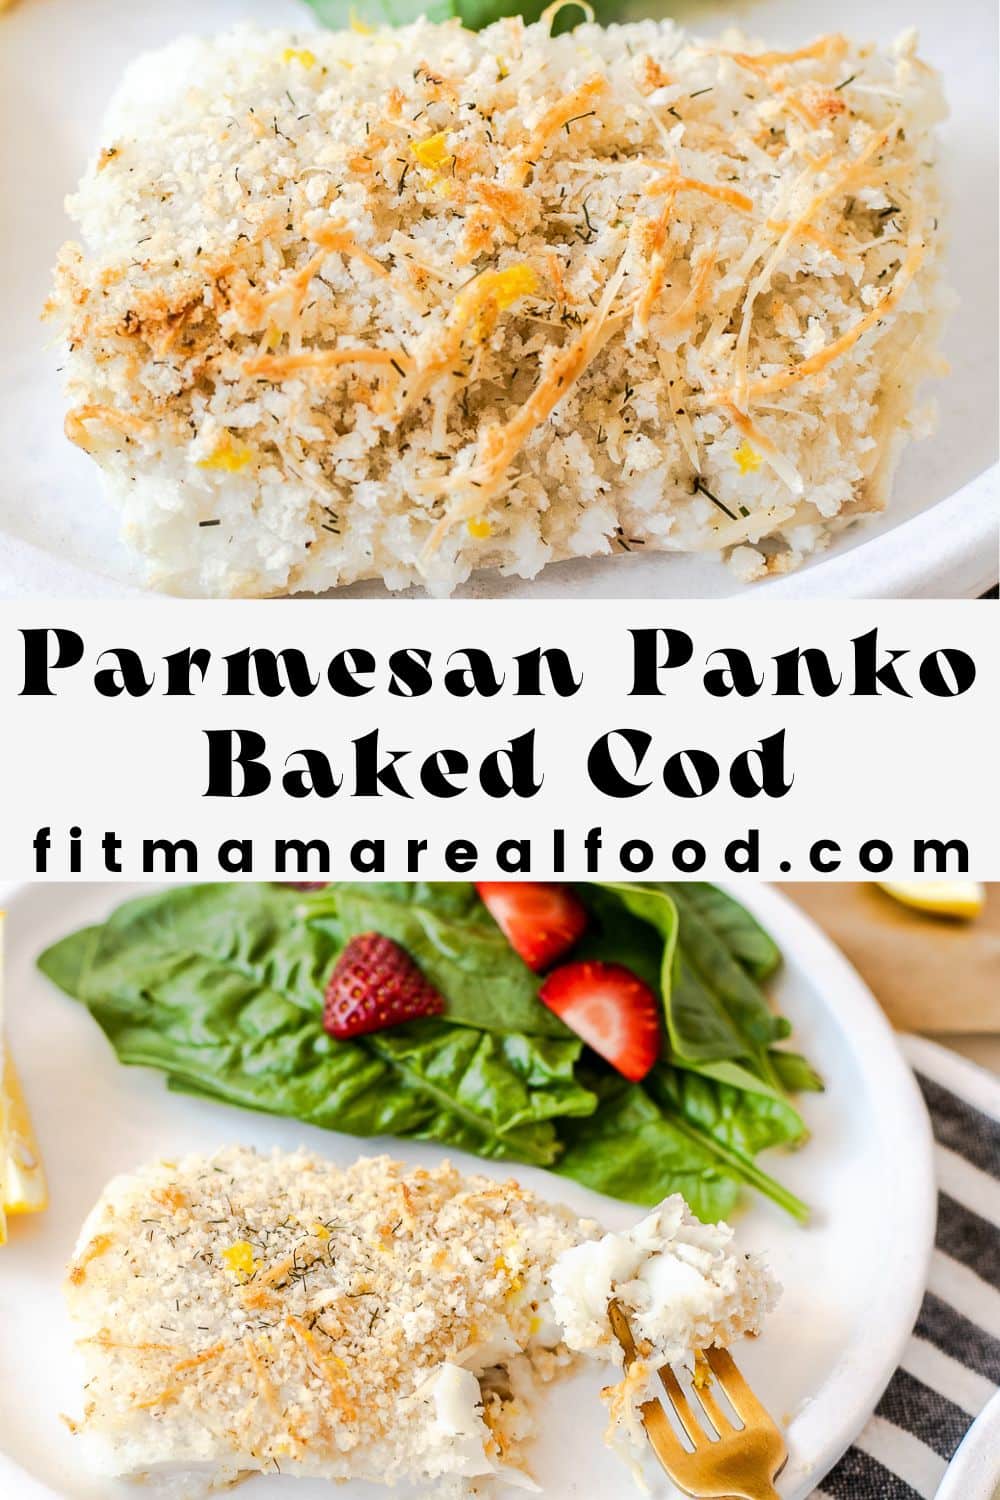 Parmesan Panko Baked Cod